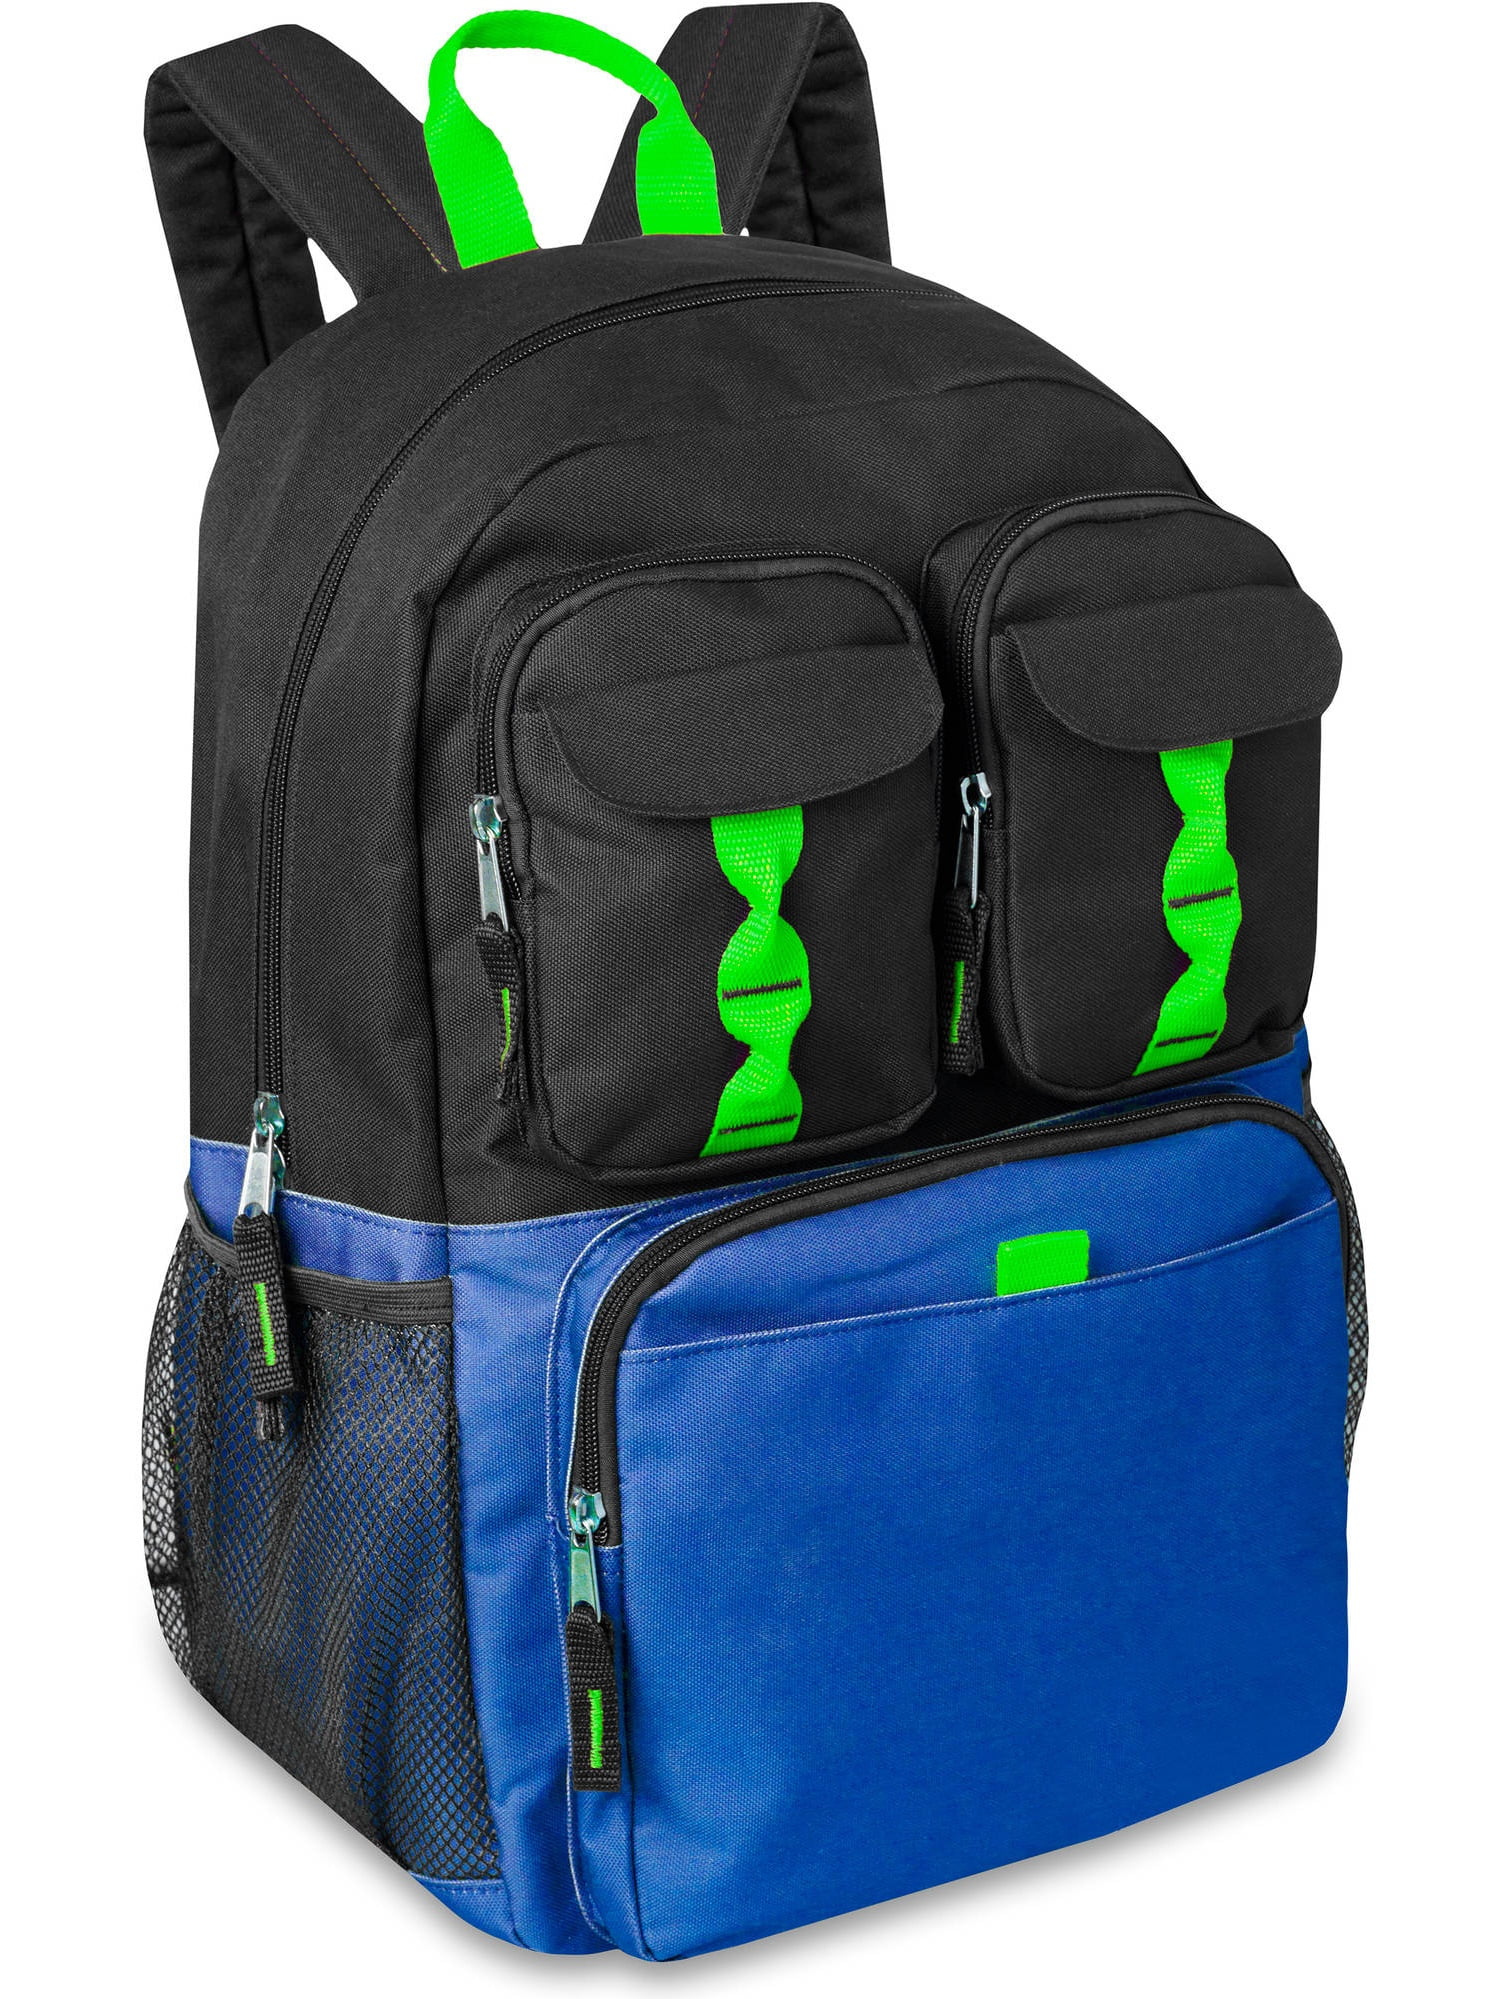 18 Inch Deluxe Quadruple Pocket Backpack - Walmart.com